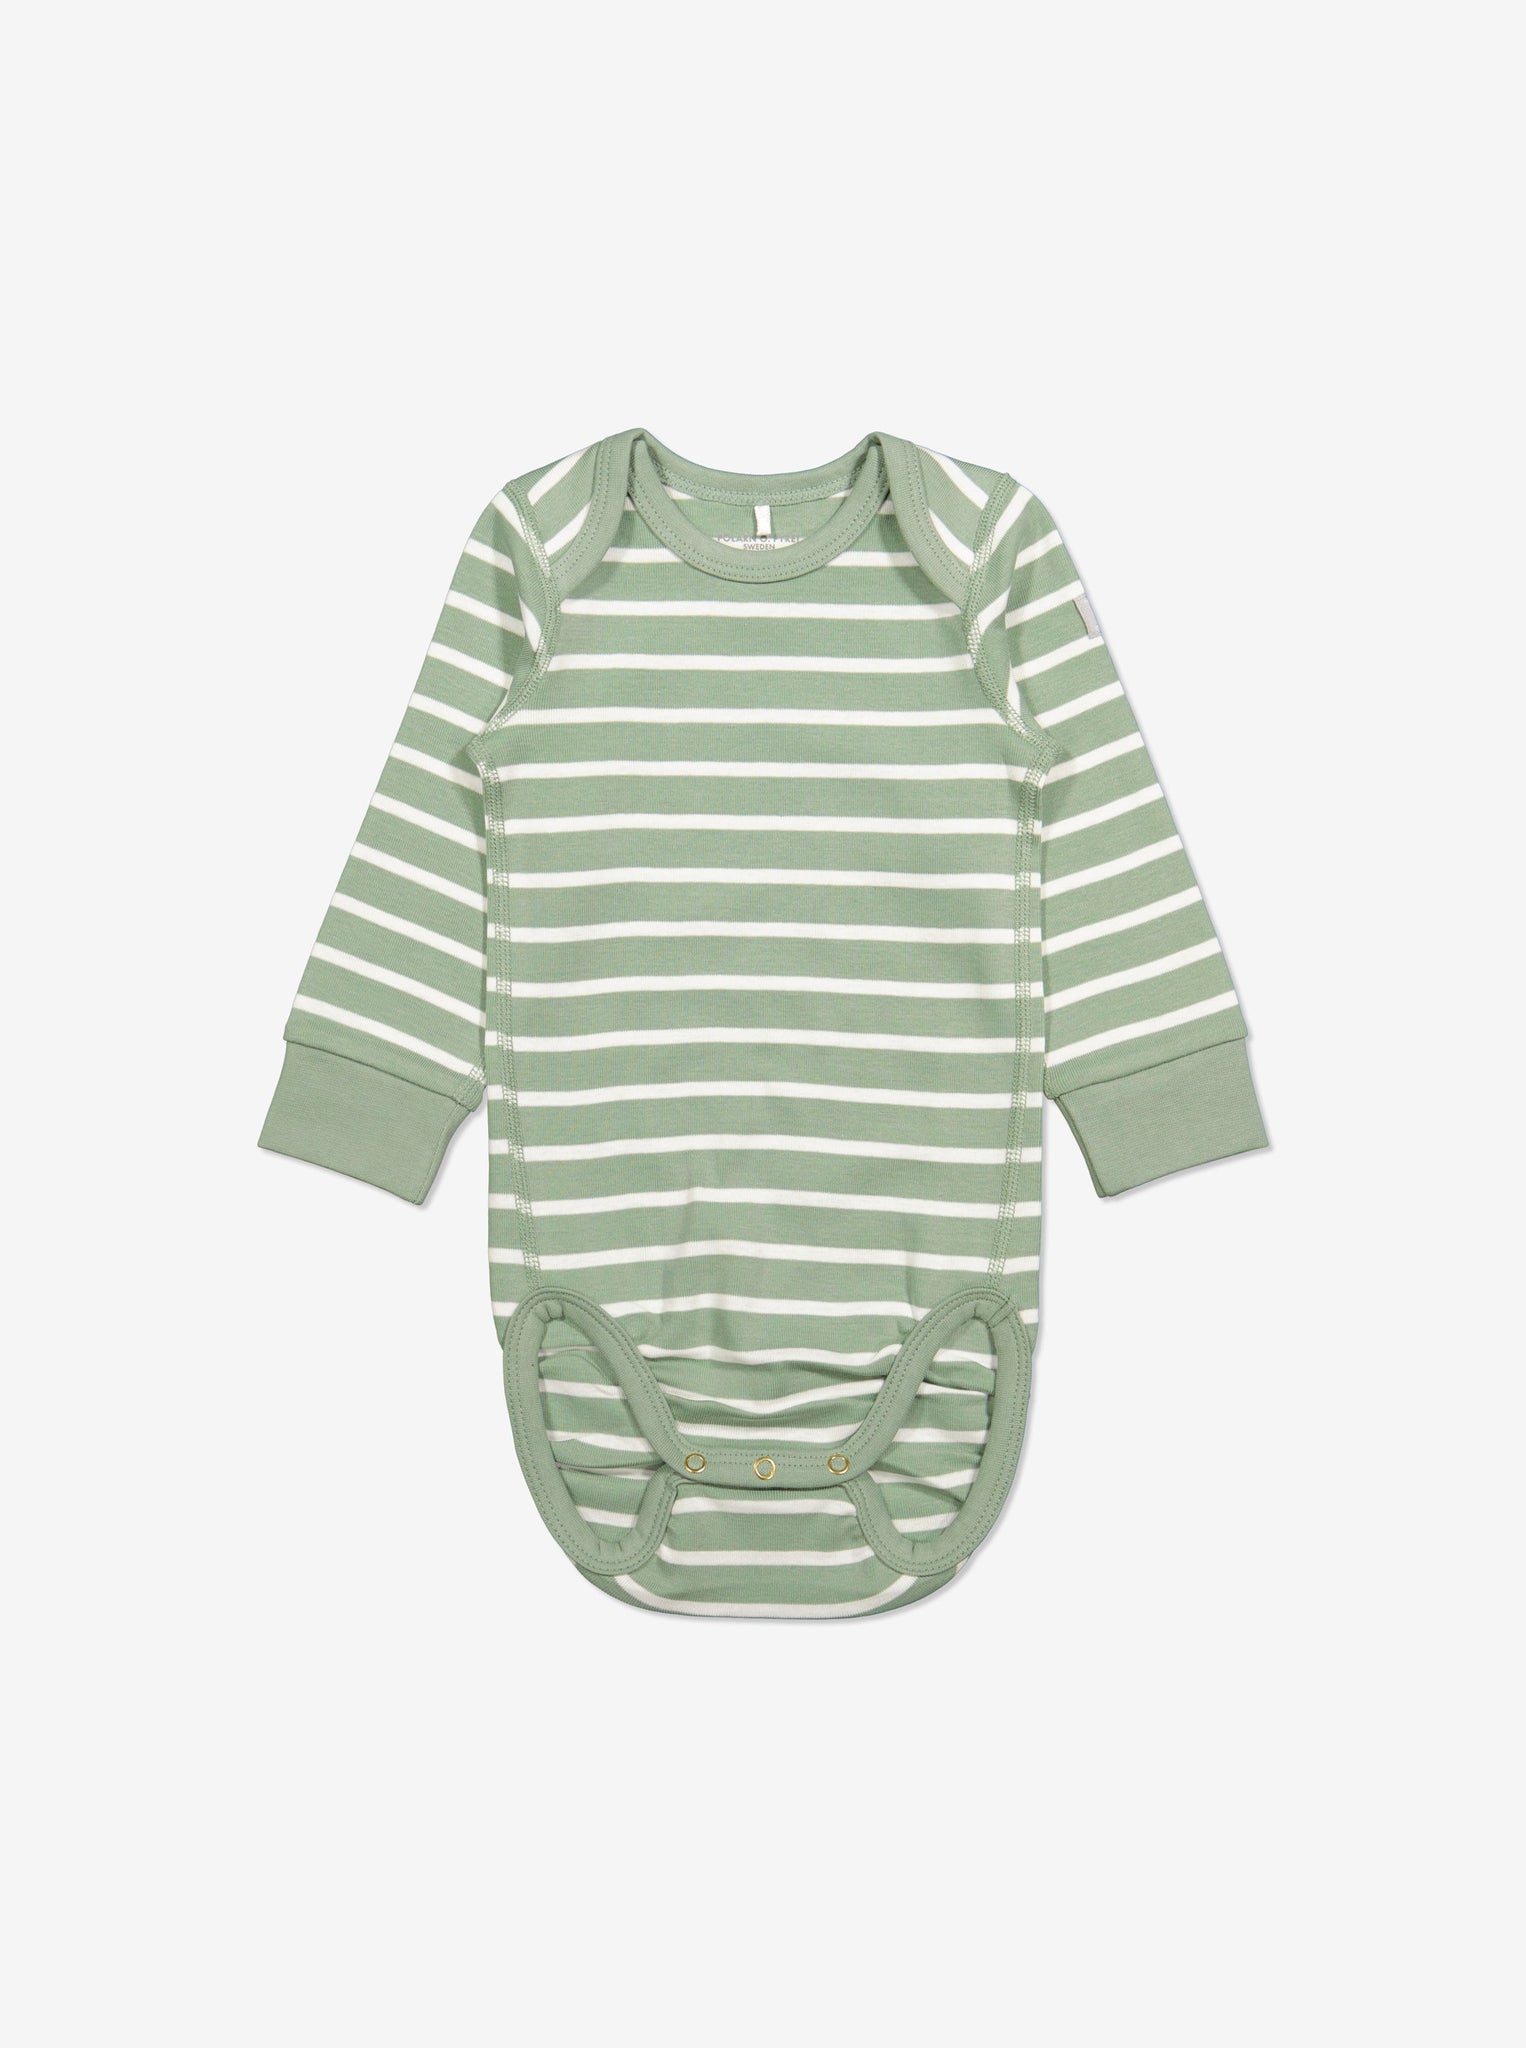  Organic Striped Green Babygrow from Polarn O. Pyret Kidswear. Made with 100% organic cotton.